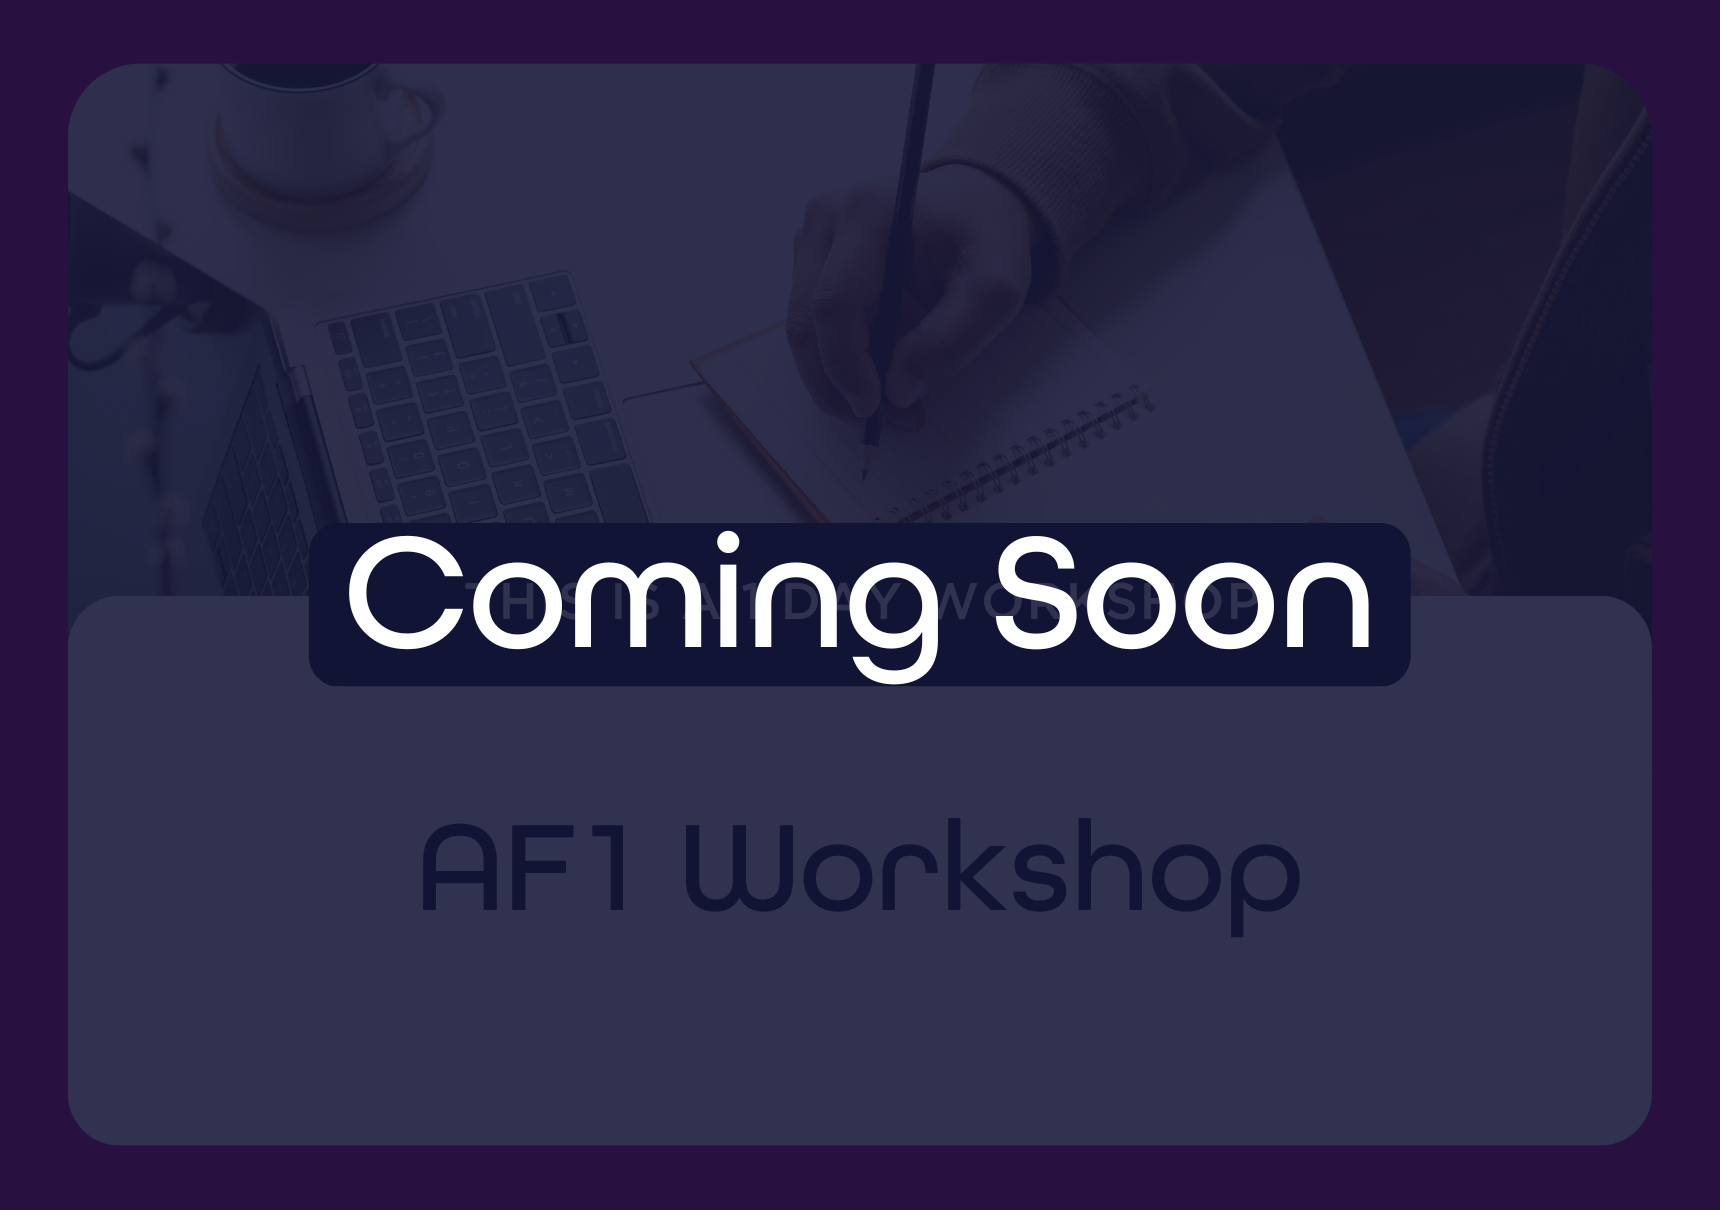 AF1 Workshop - coming soon